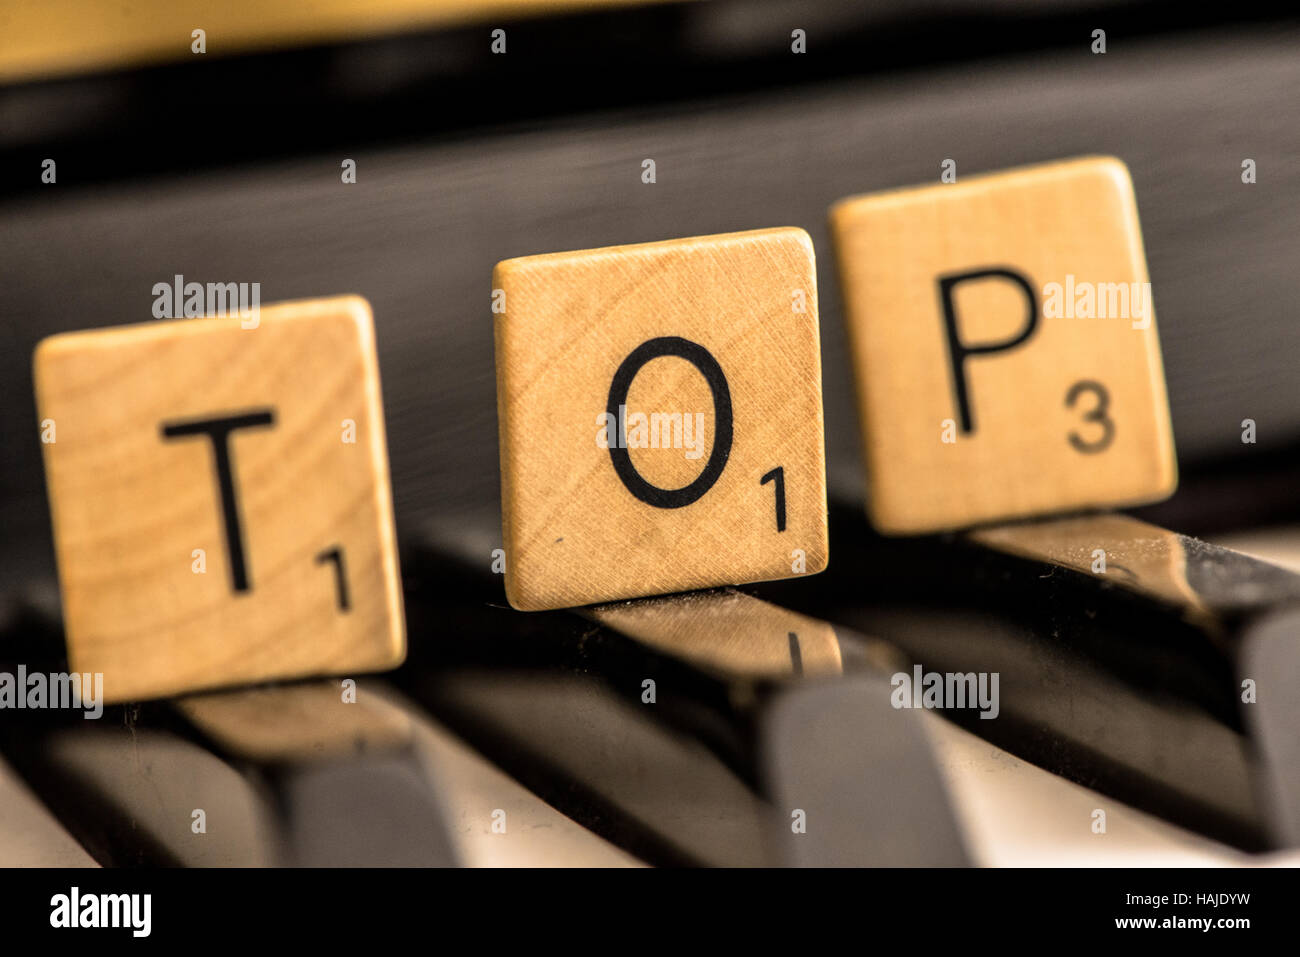 Wort "Top" am Piano-Tasten Stockfoto